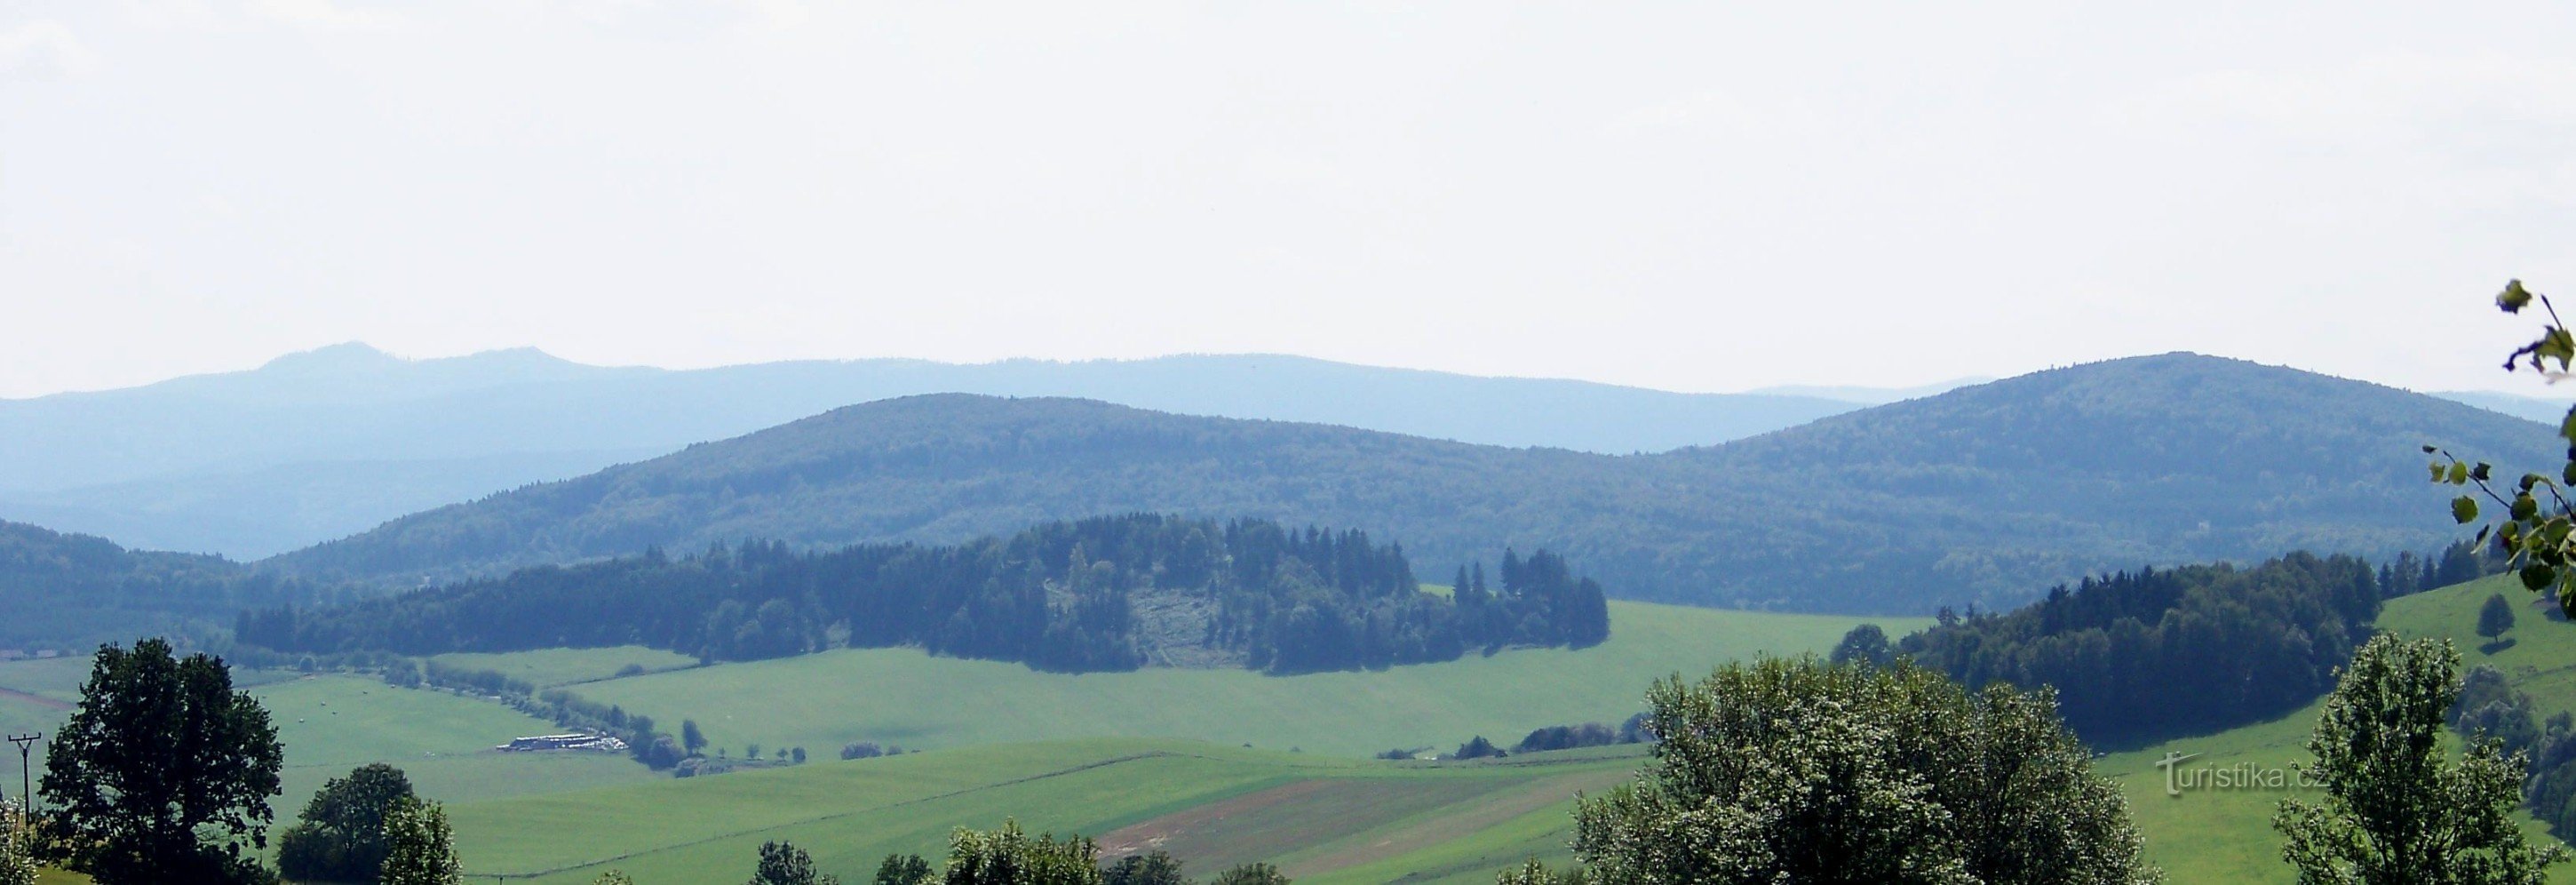 Jezvinec στην άκρη δεξιά, δίπλα στο Havranice, στο βάθος το Ostrý και άλλες κορυφογραμμές συνόρων..ní